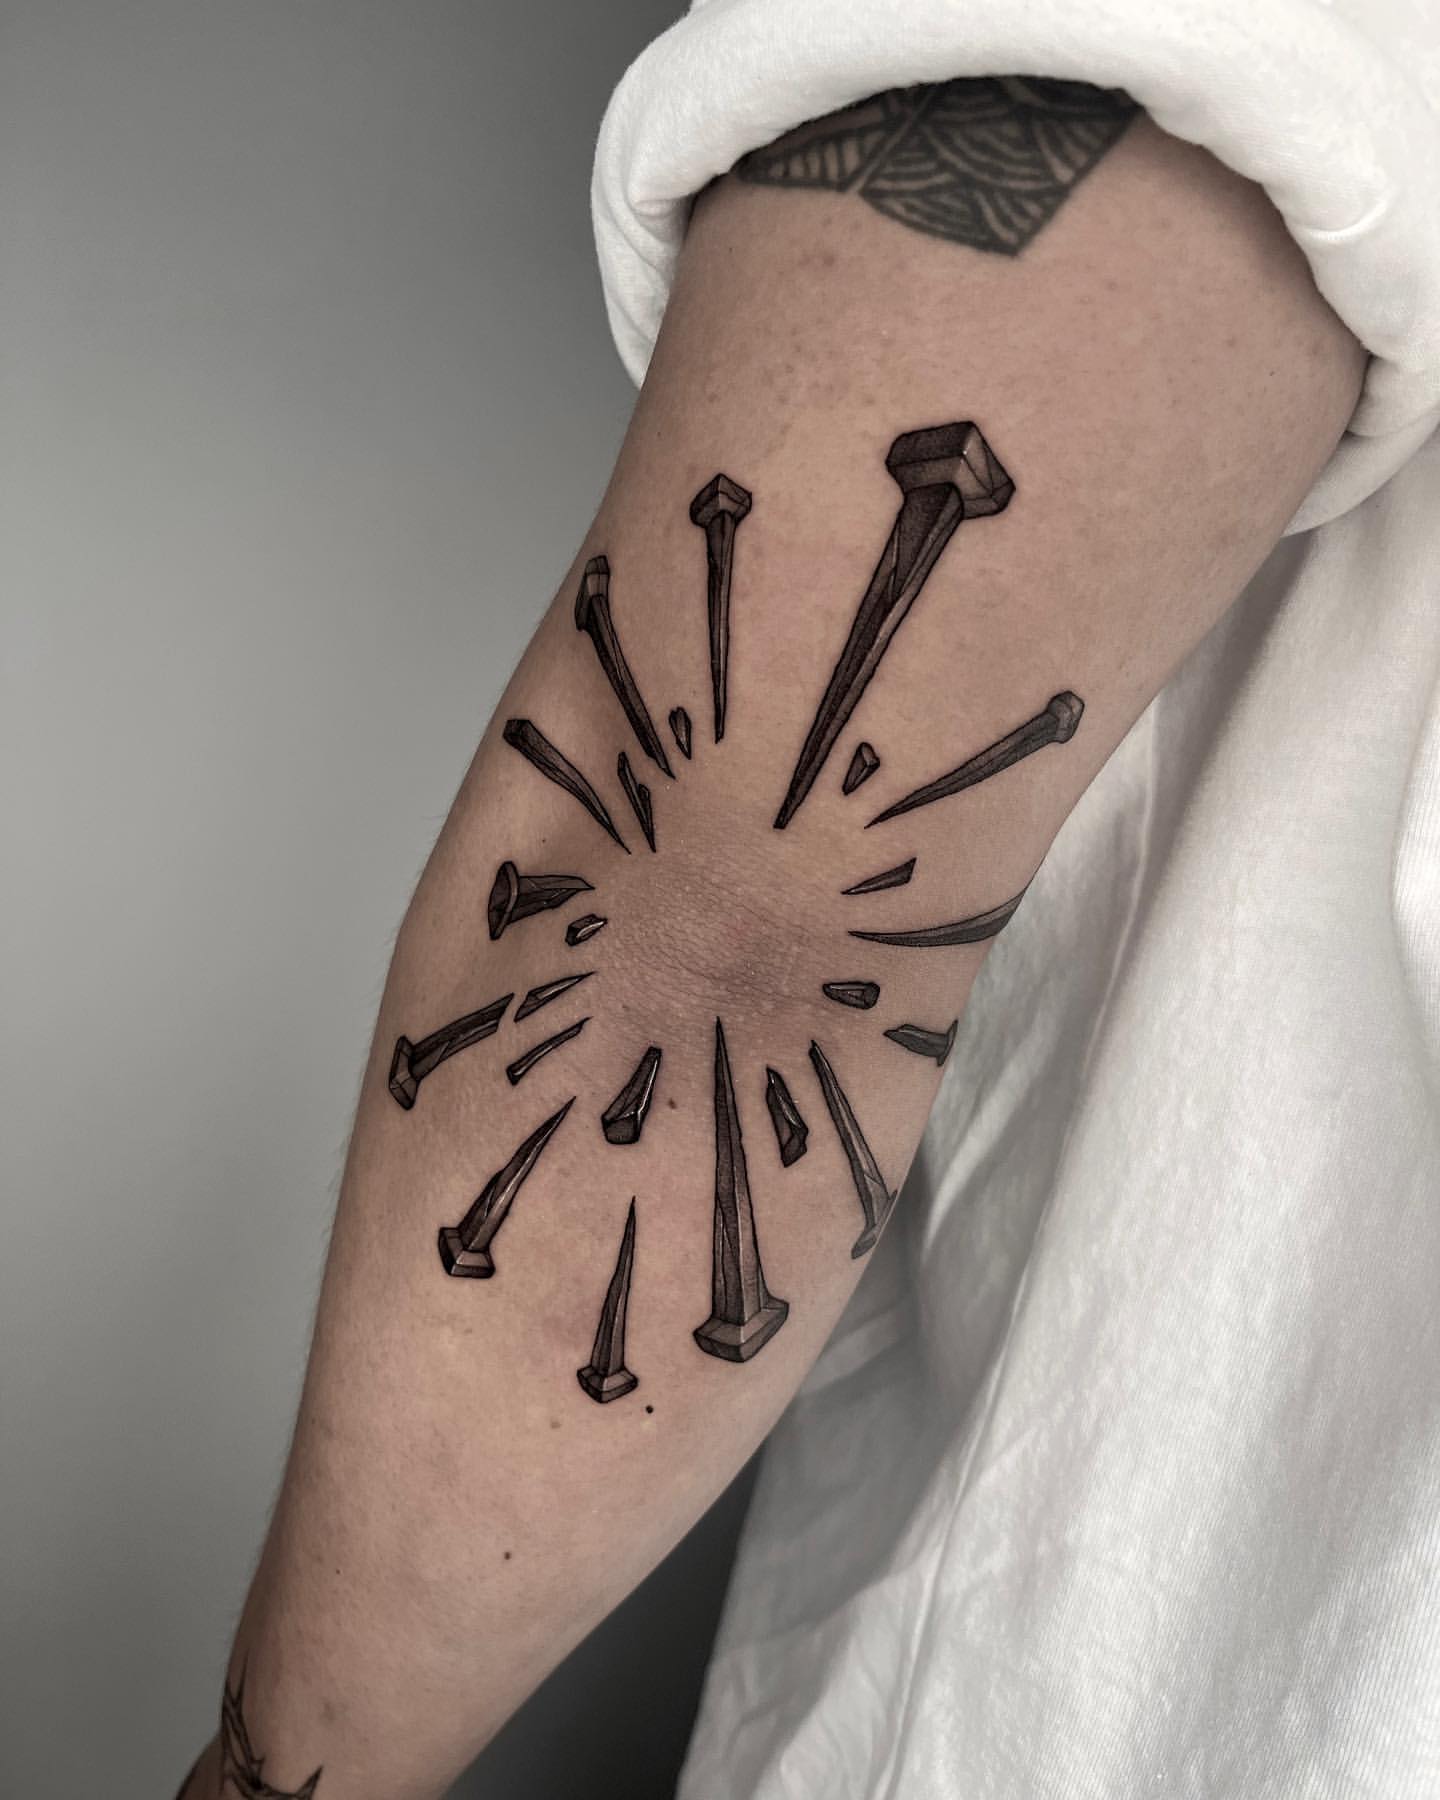 Beetle Tattoo With Flowers - Best Tattoo Ideas Gallery